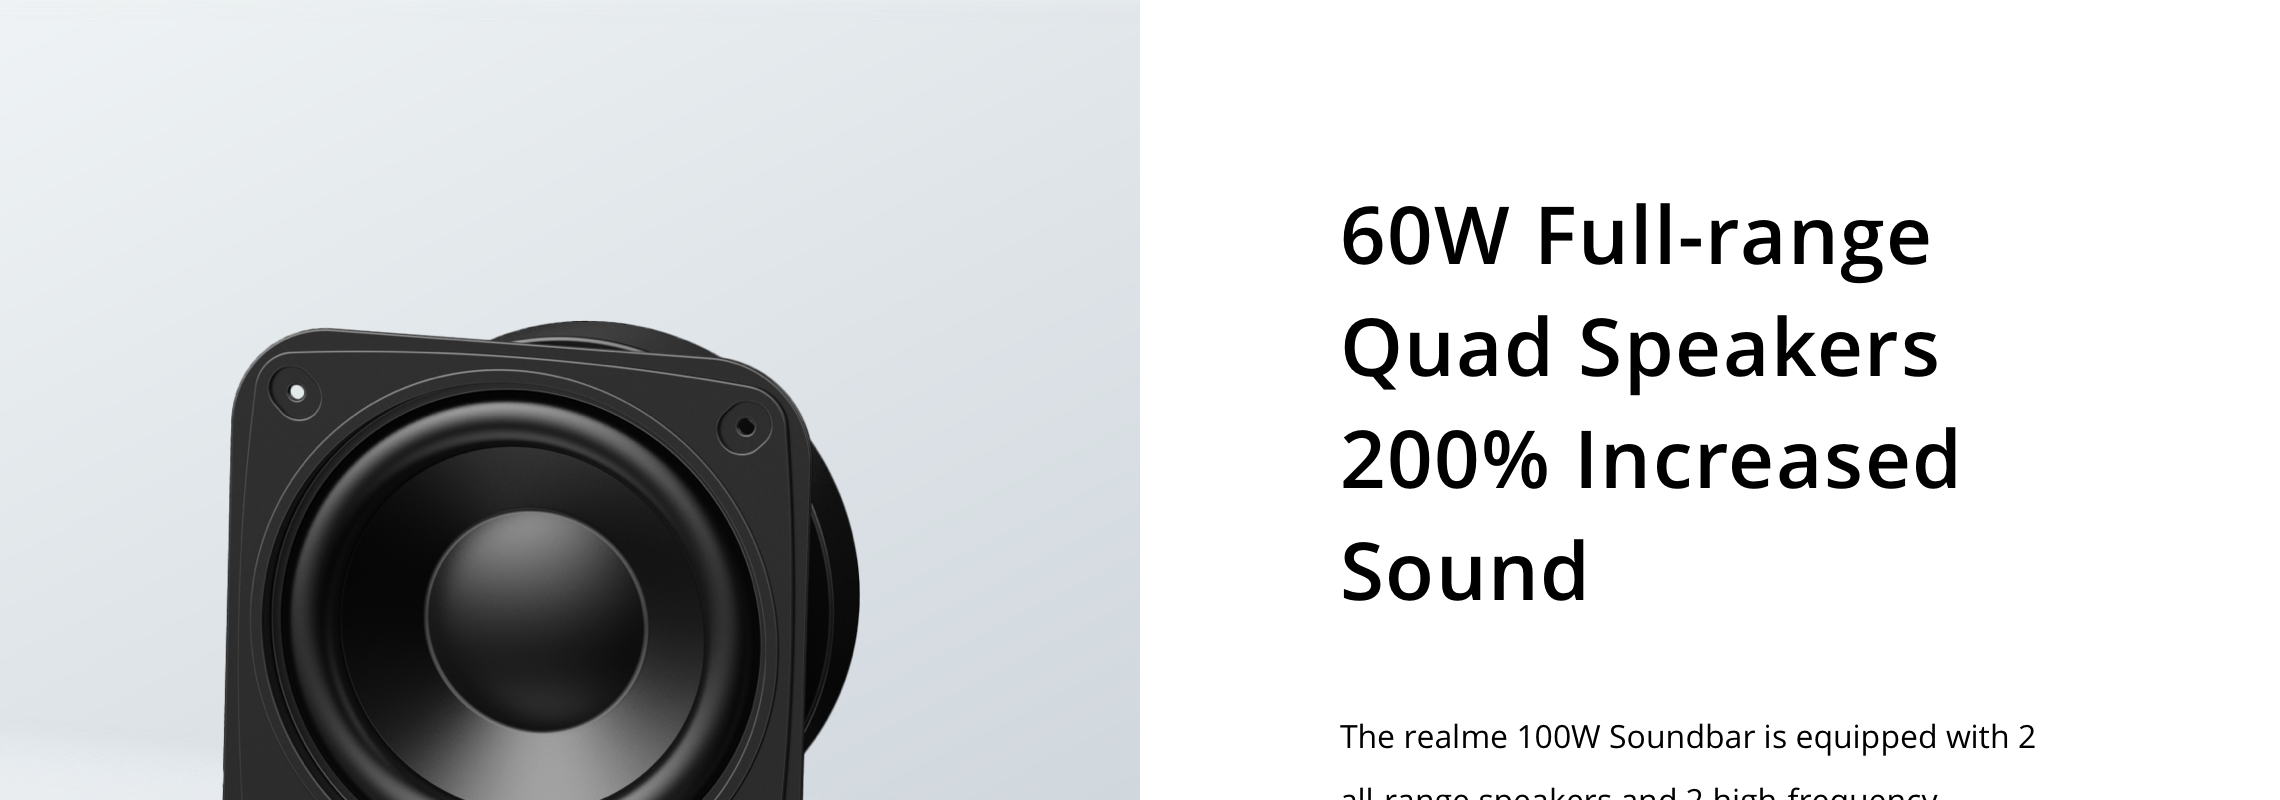 Realme-100W-bluetooth-Soundbar-Home-Theater-21-Channel-60W-Full-range-Speaker-40W-Bass-Subwoofer-Aud-1811220-5